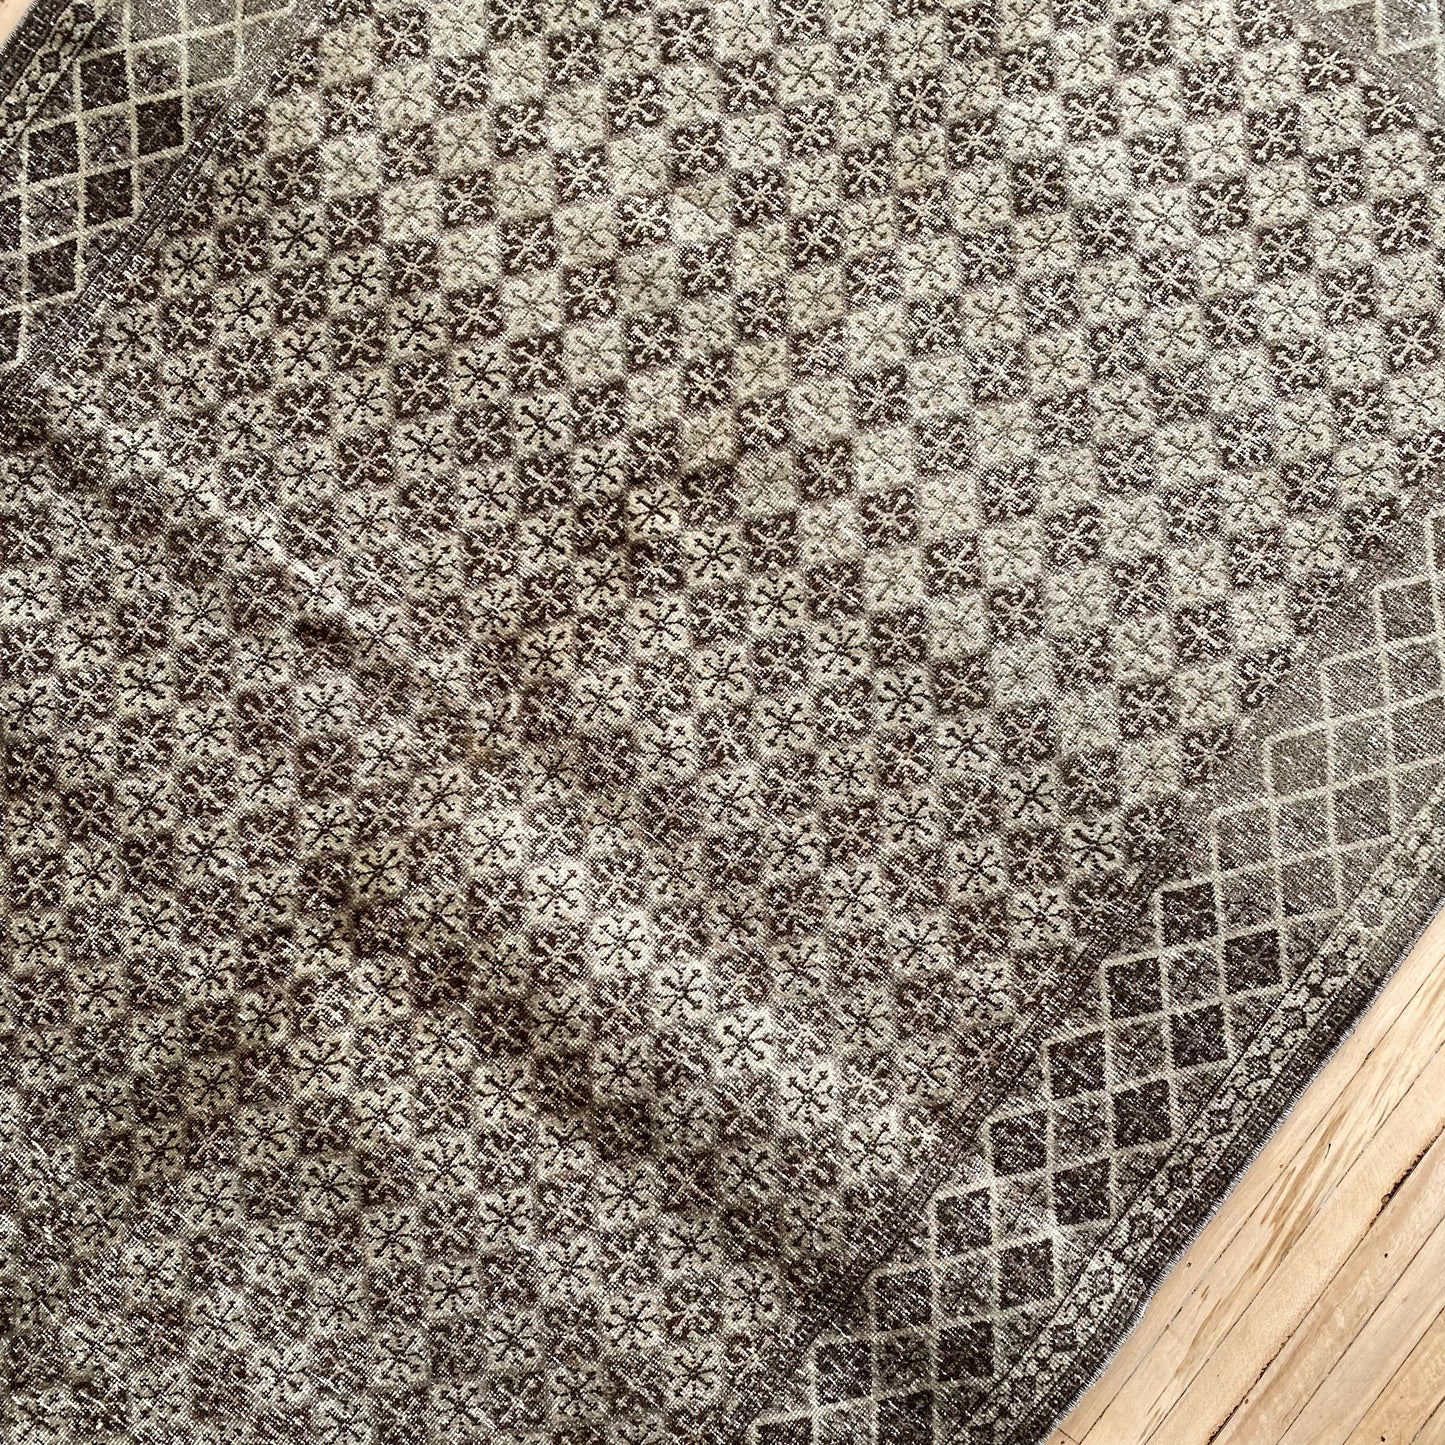 HUDSON Vintage Hand-knotted Wool Rug, Diamonds (4.6 x 7.2)